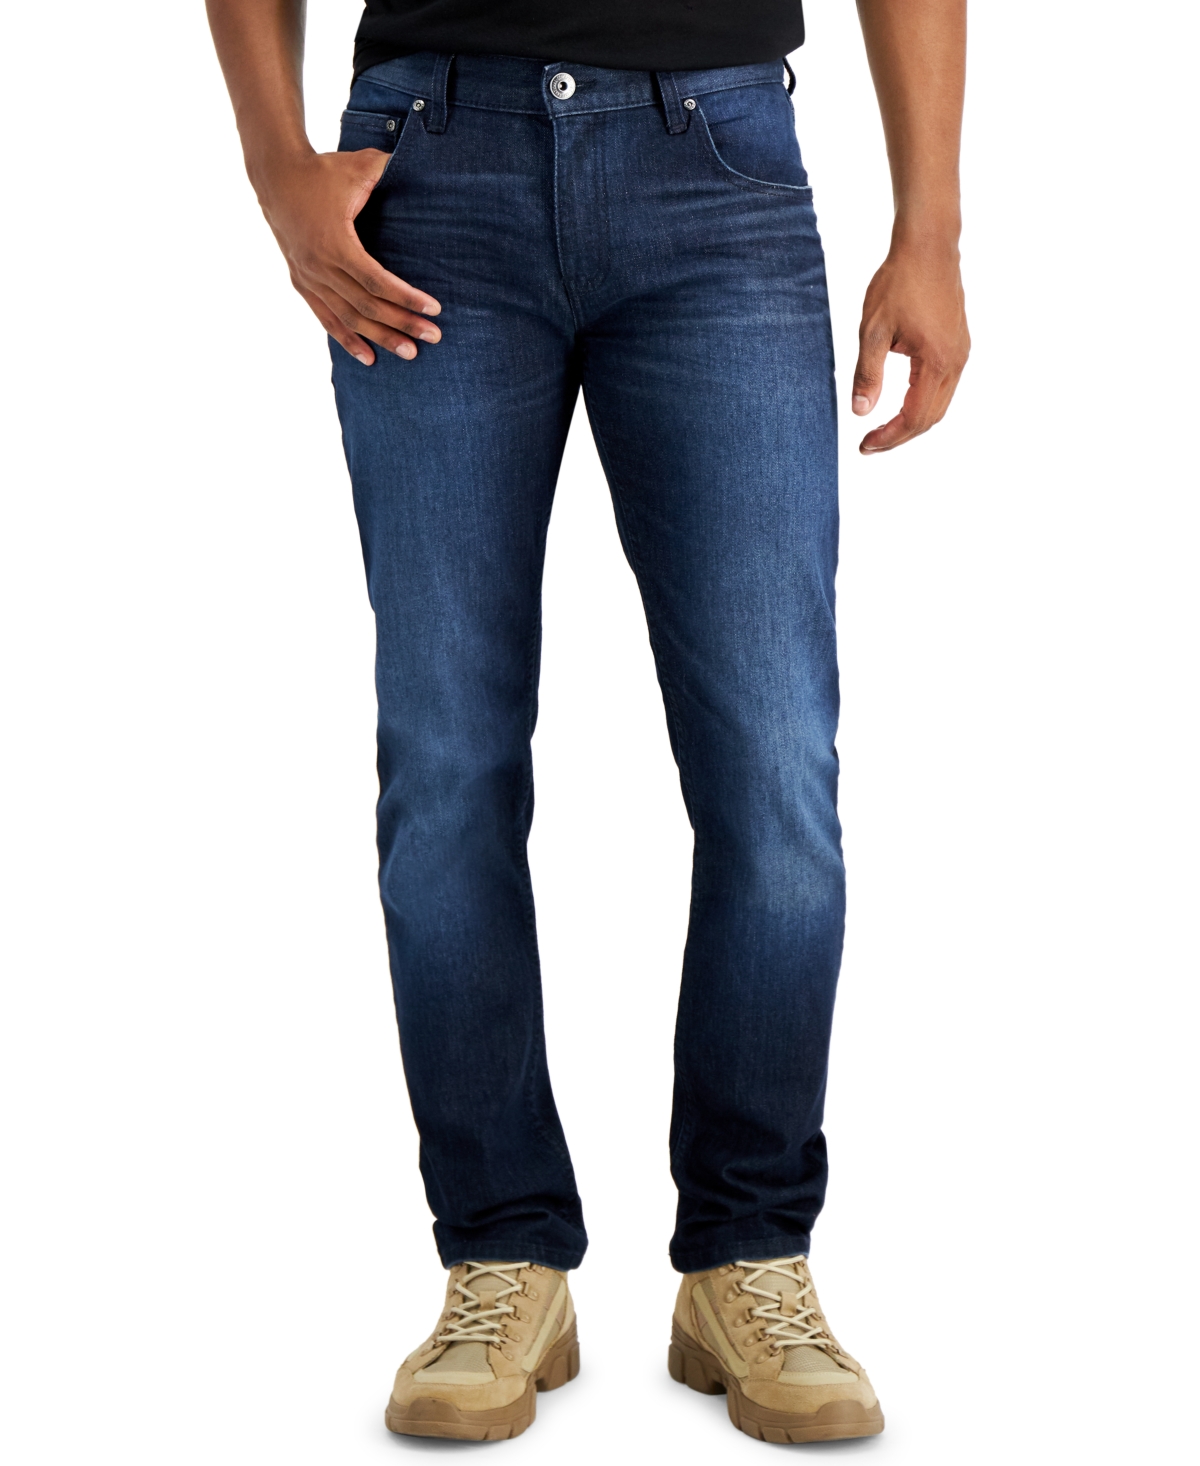 Men's Slim Straight Core Jeans, Created for Macy's - Dark Wash